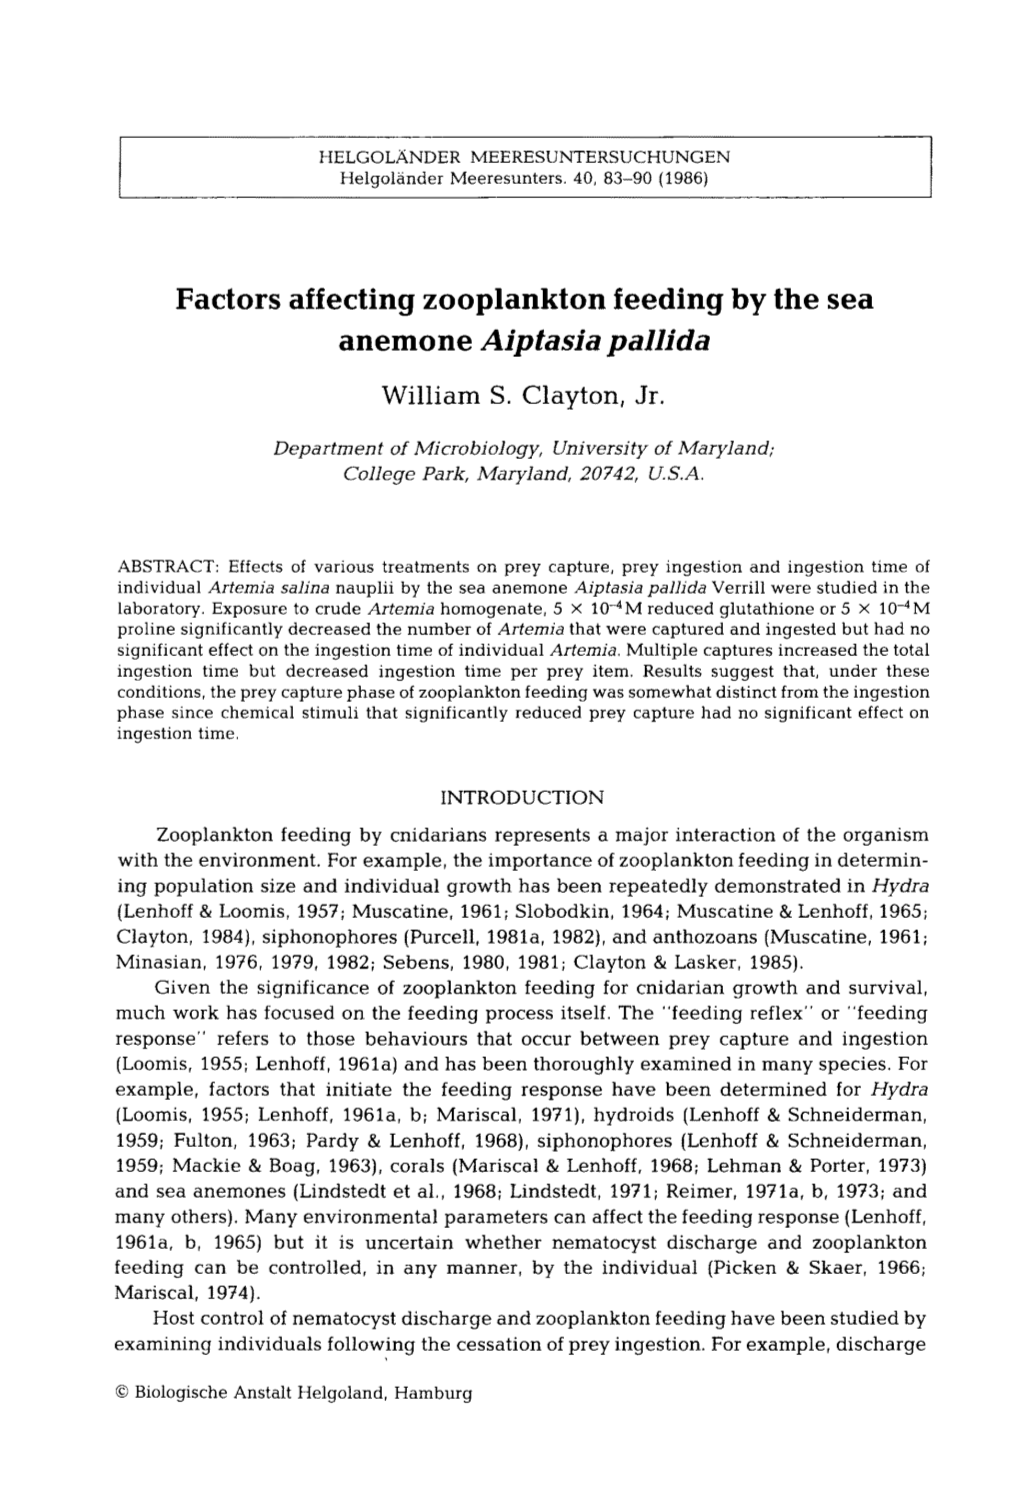 Factors Affecting Zooplankton Feeding by the Sea Anemone Aiptasia Pallida William S